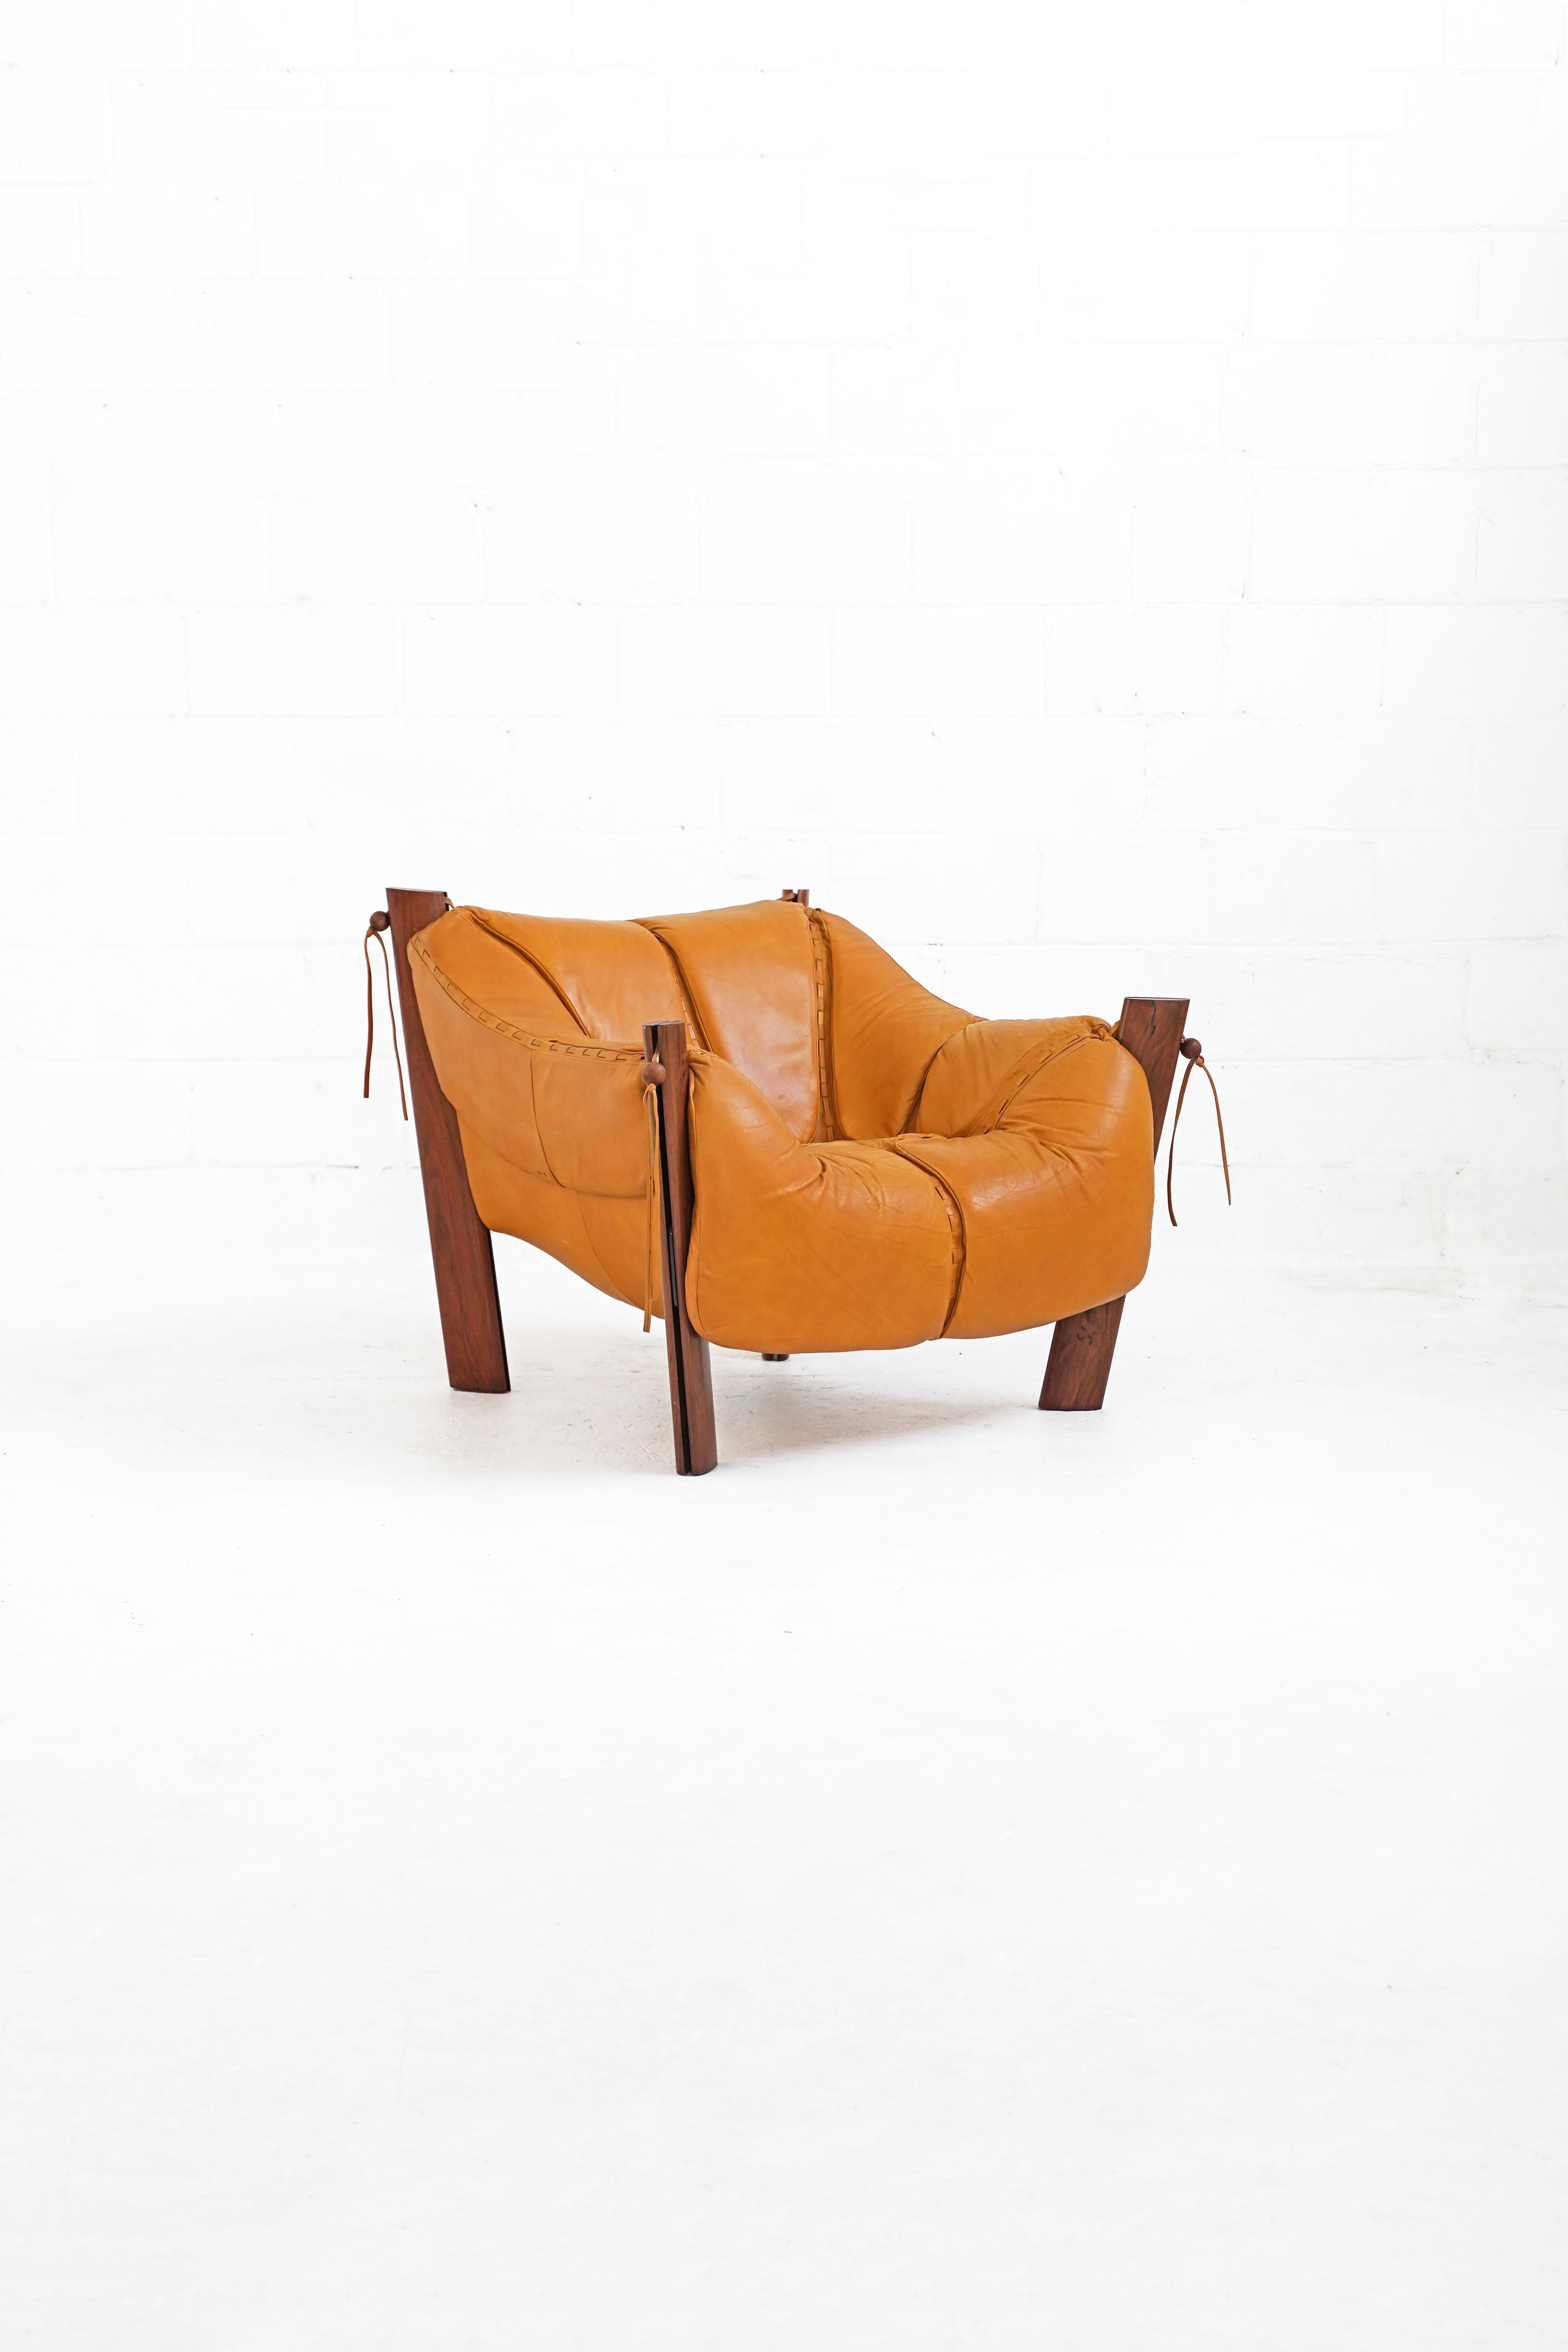 MP-211 Lounge Chair by Brazilian Designer Percival Lafer for Móveis Lafer 9